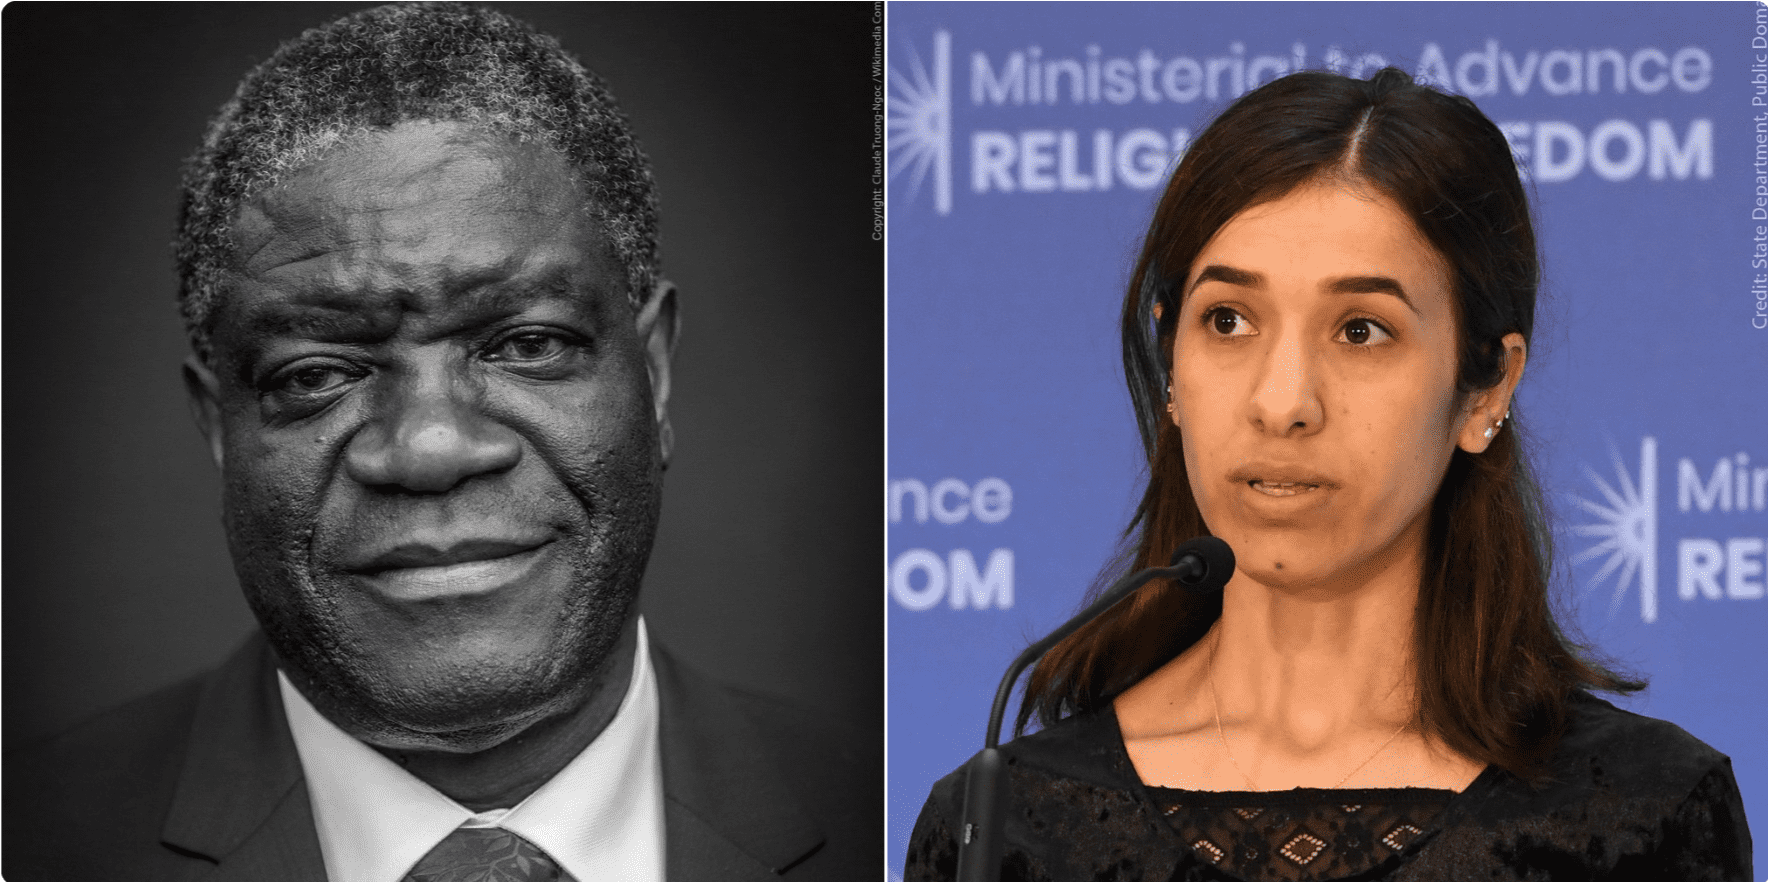 2018 Nobel Peace Prize: Denis Mukwege and Nadia Murad, helping victims of sexual violence